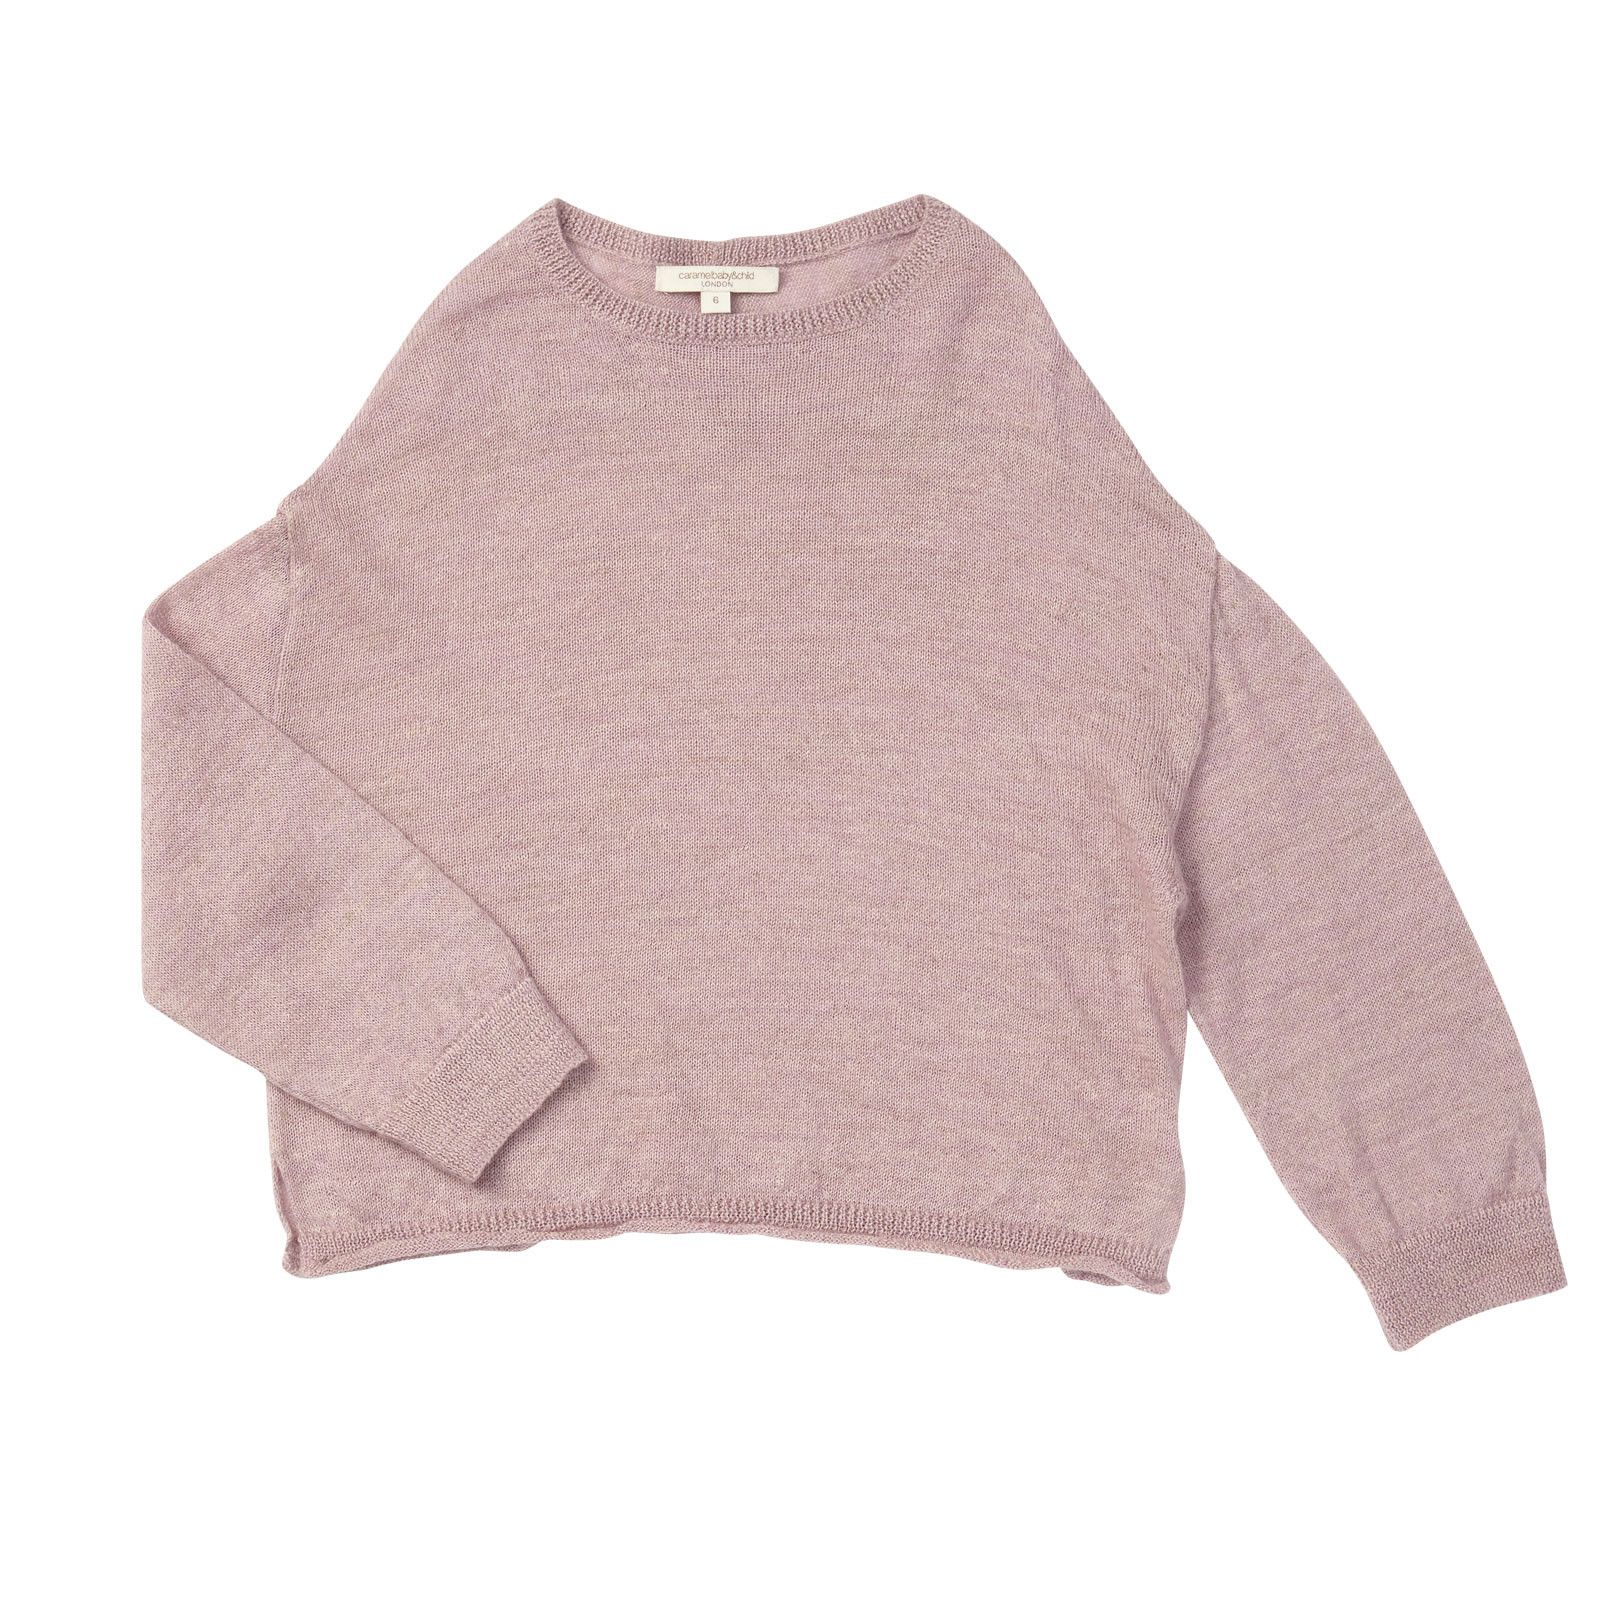 Boys Light Pink Wool Knitted Sweater - CÉMAROSE | Children's Fashion Store - 1